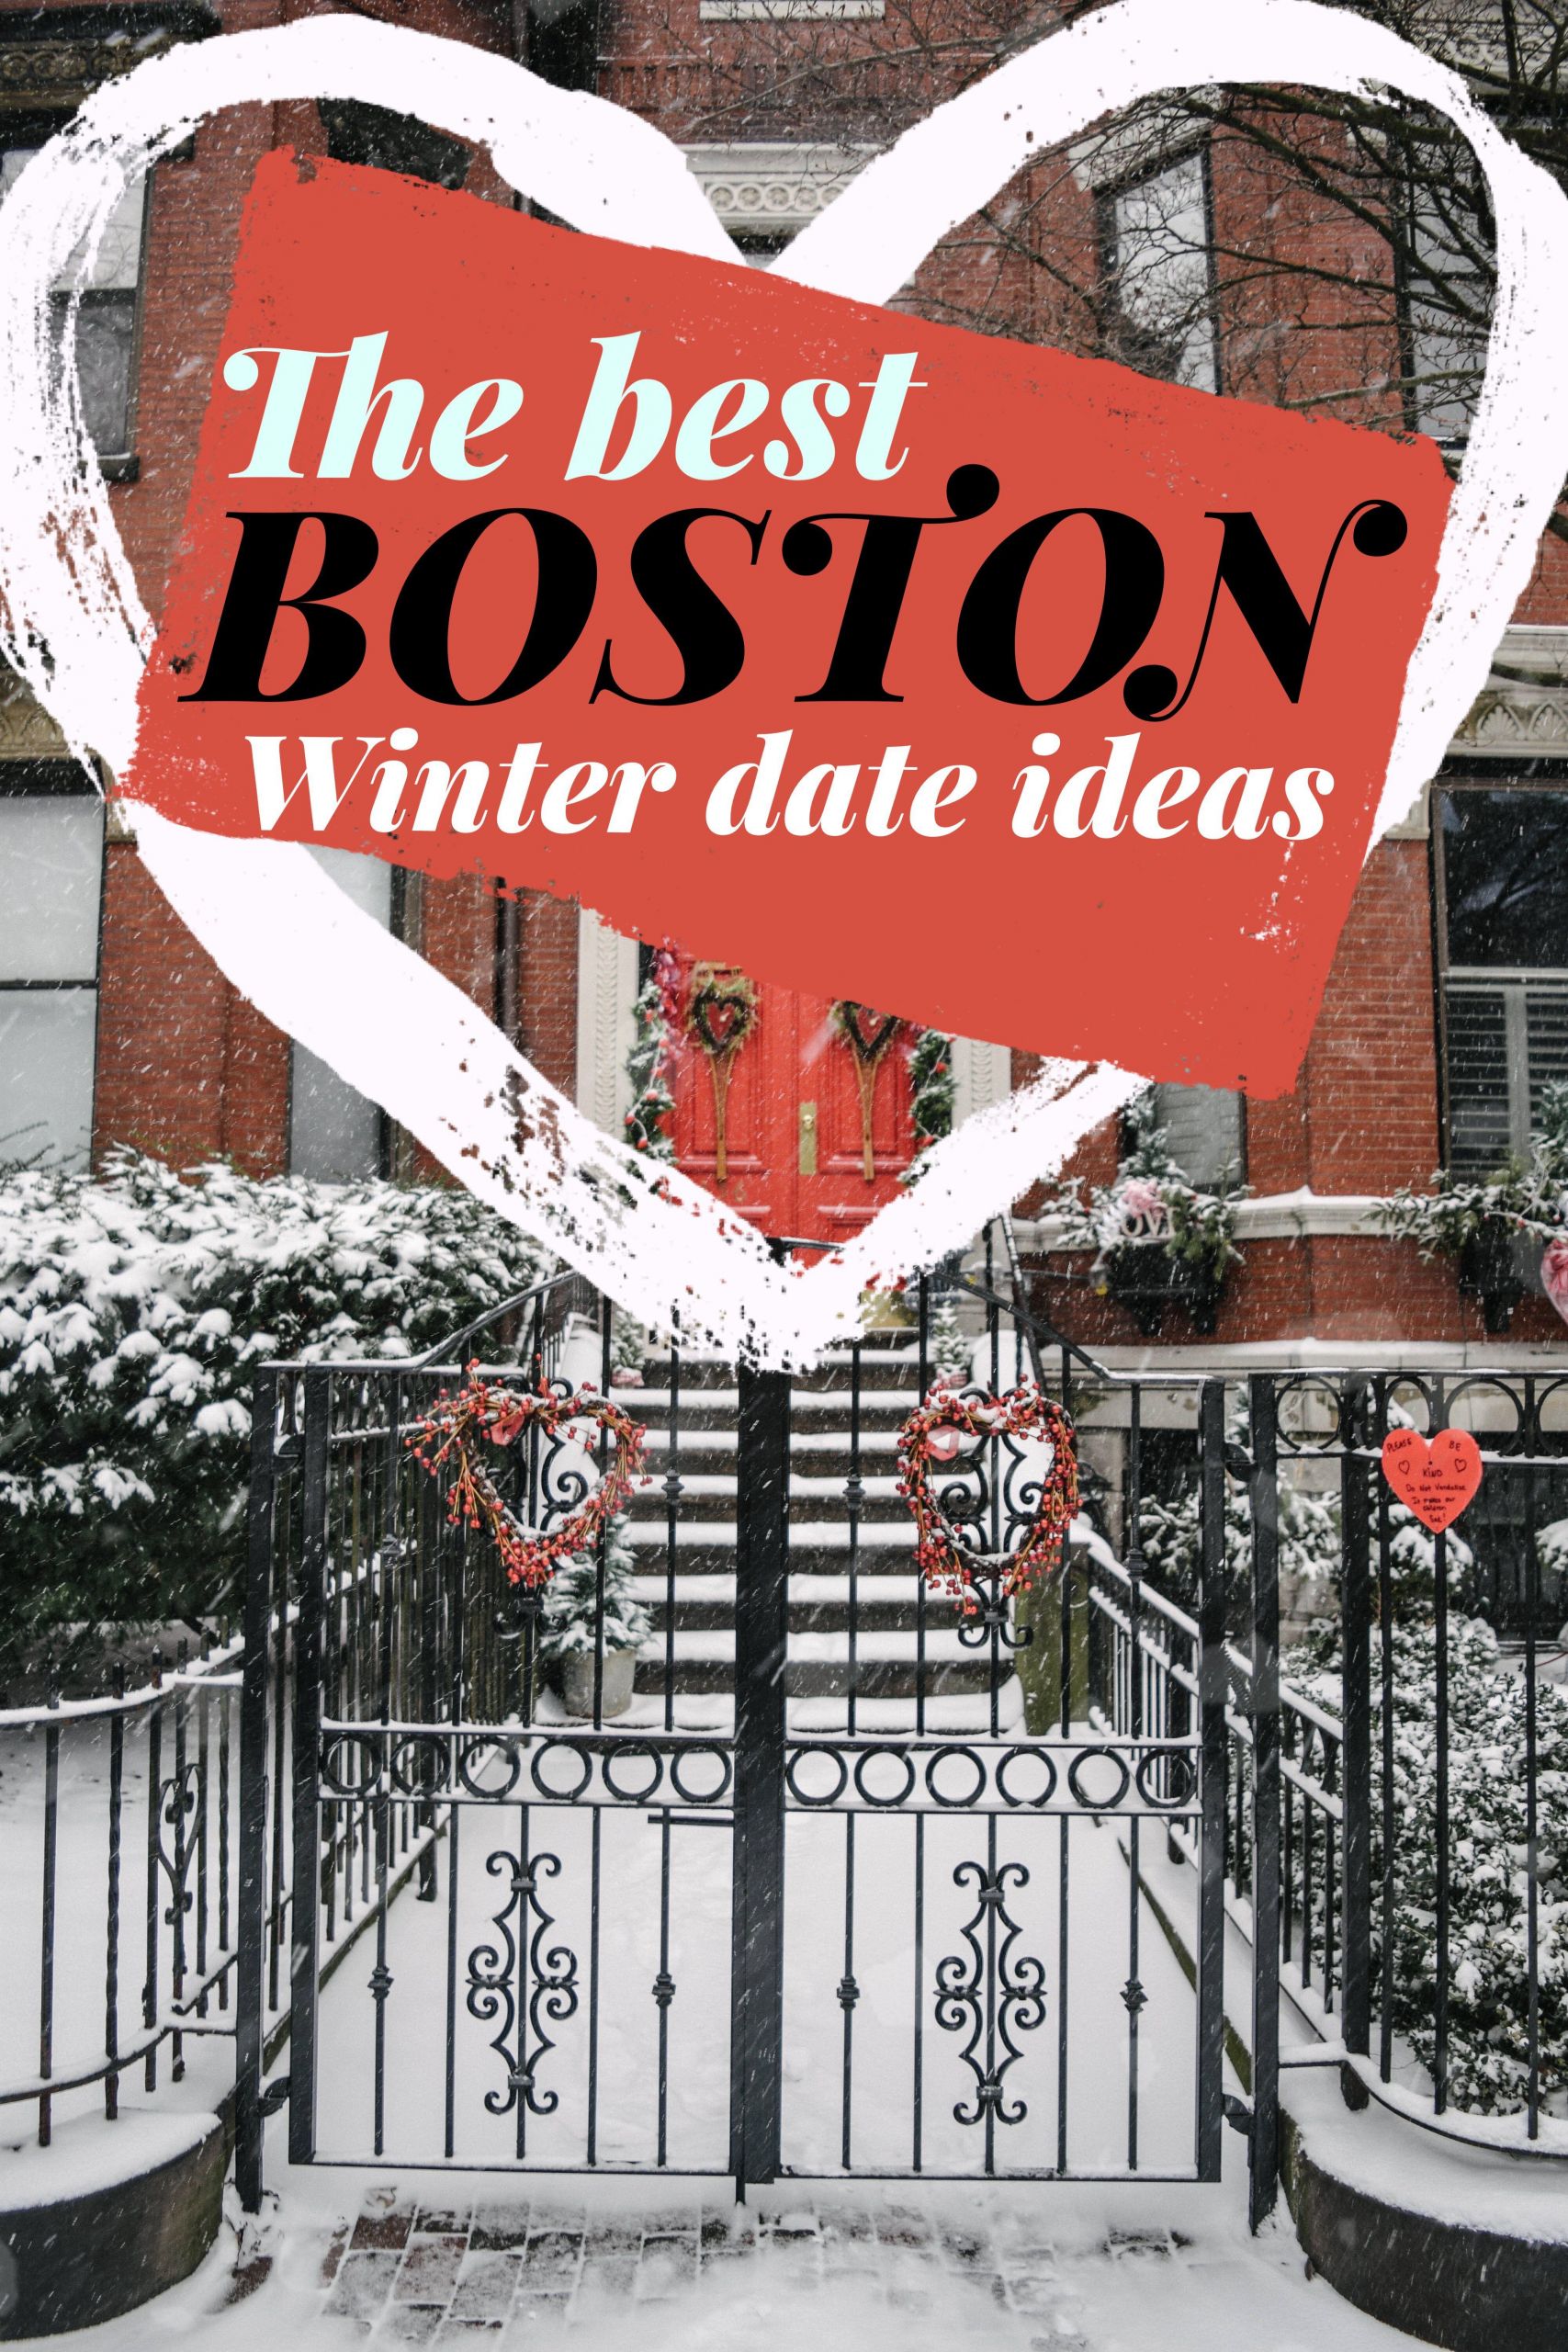 Boston Date Ideas Winter
 Best winter date ideas in Boston for Valentine’s Day